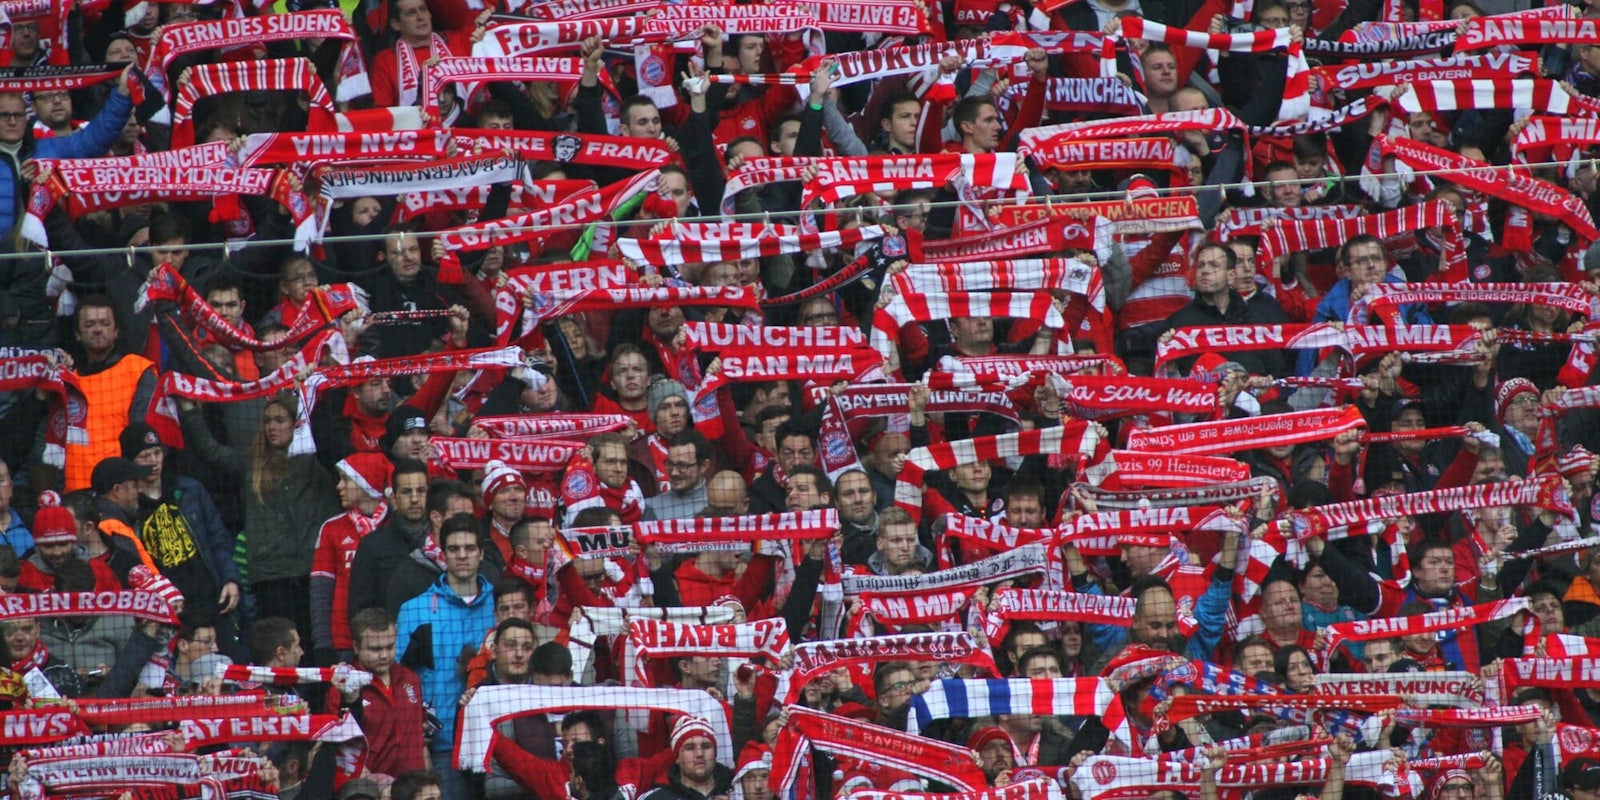 DFB-Pokal Final Live Stream: Watch Bayern Munich vs RB Leipzig Free